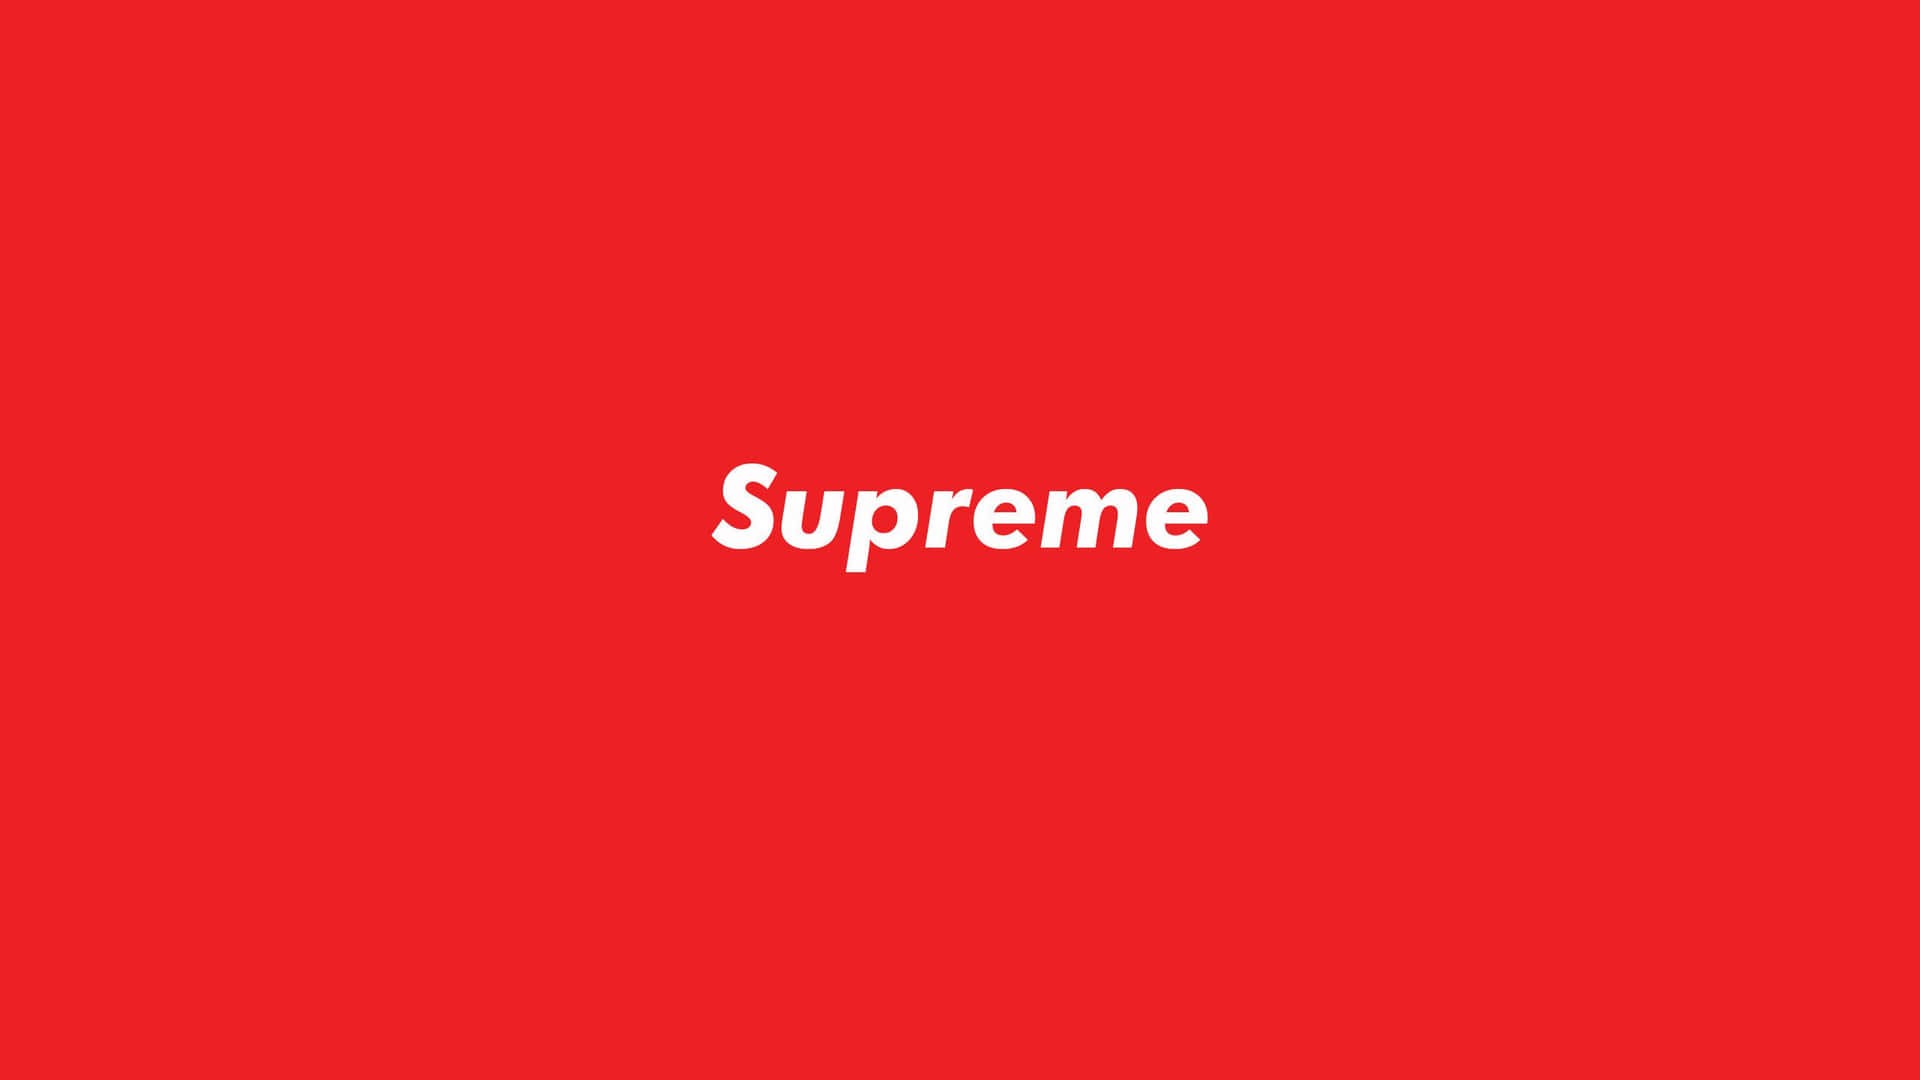 200+] Supreme Logo Wallpapers | Wallpapers.com